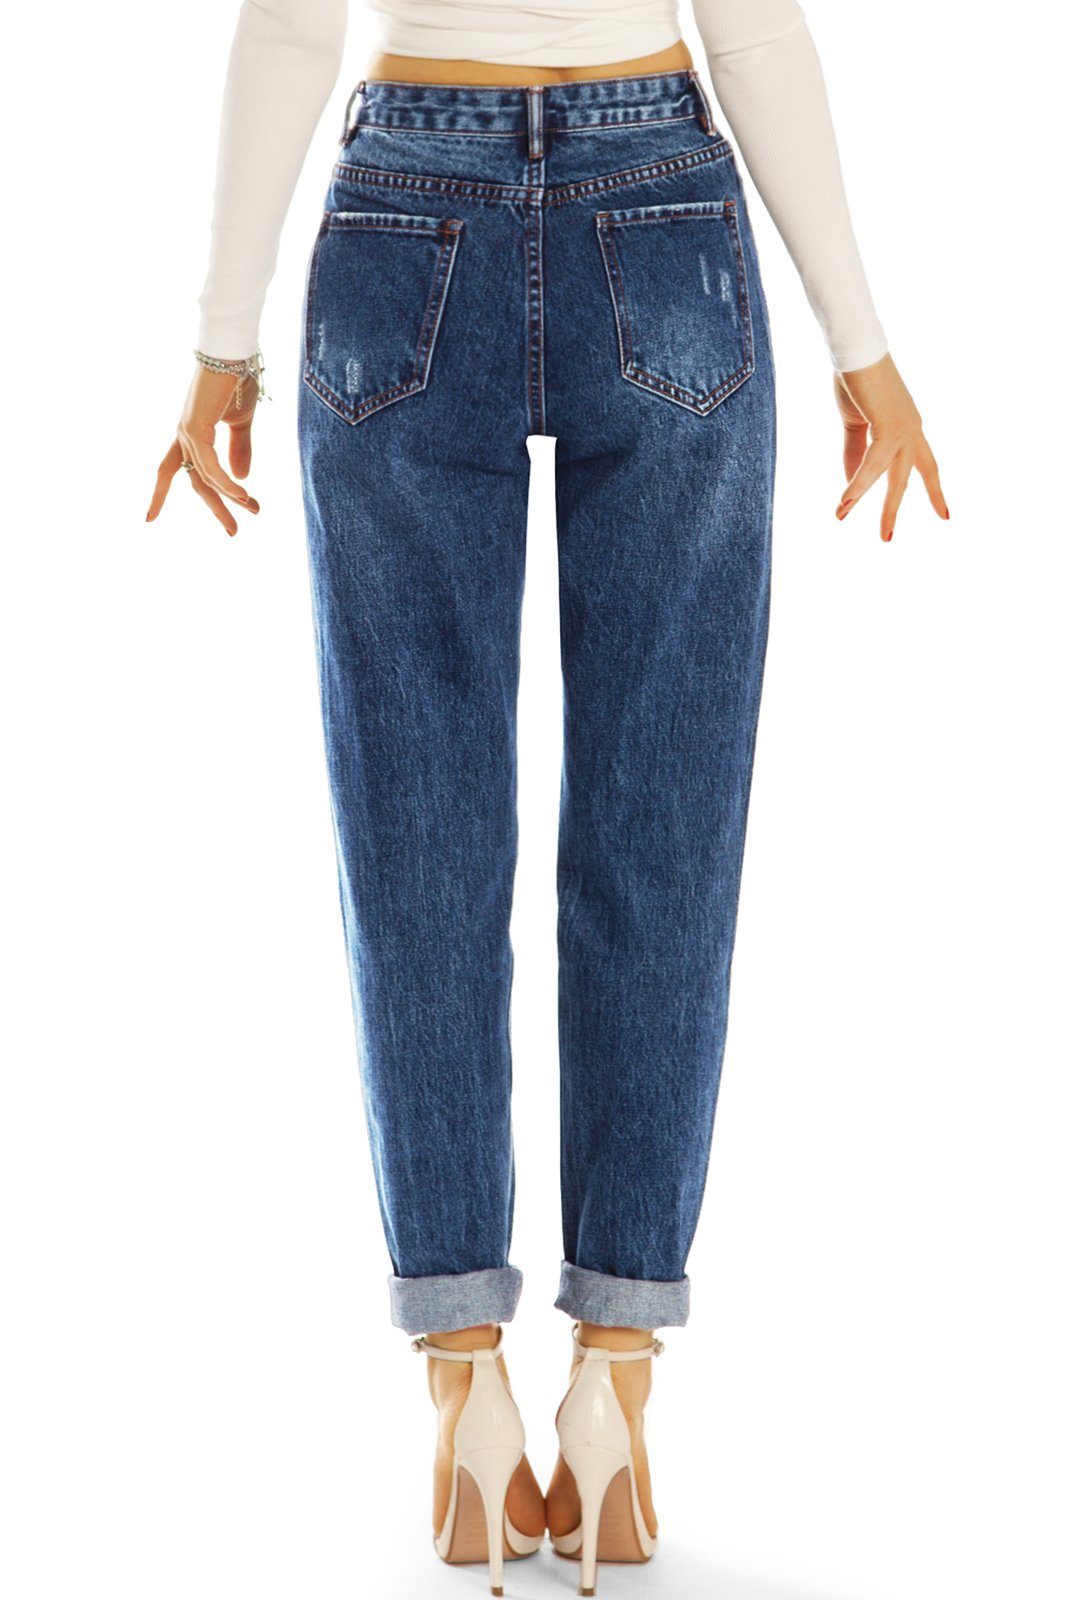 j15f-1 5-Pocket-Style Bequem Mom Damen High Destroyed Waist Mom-Jeans - Jeans Waist, Boyfriend - styled - High Locker be Hose